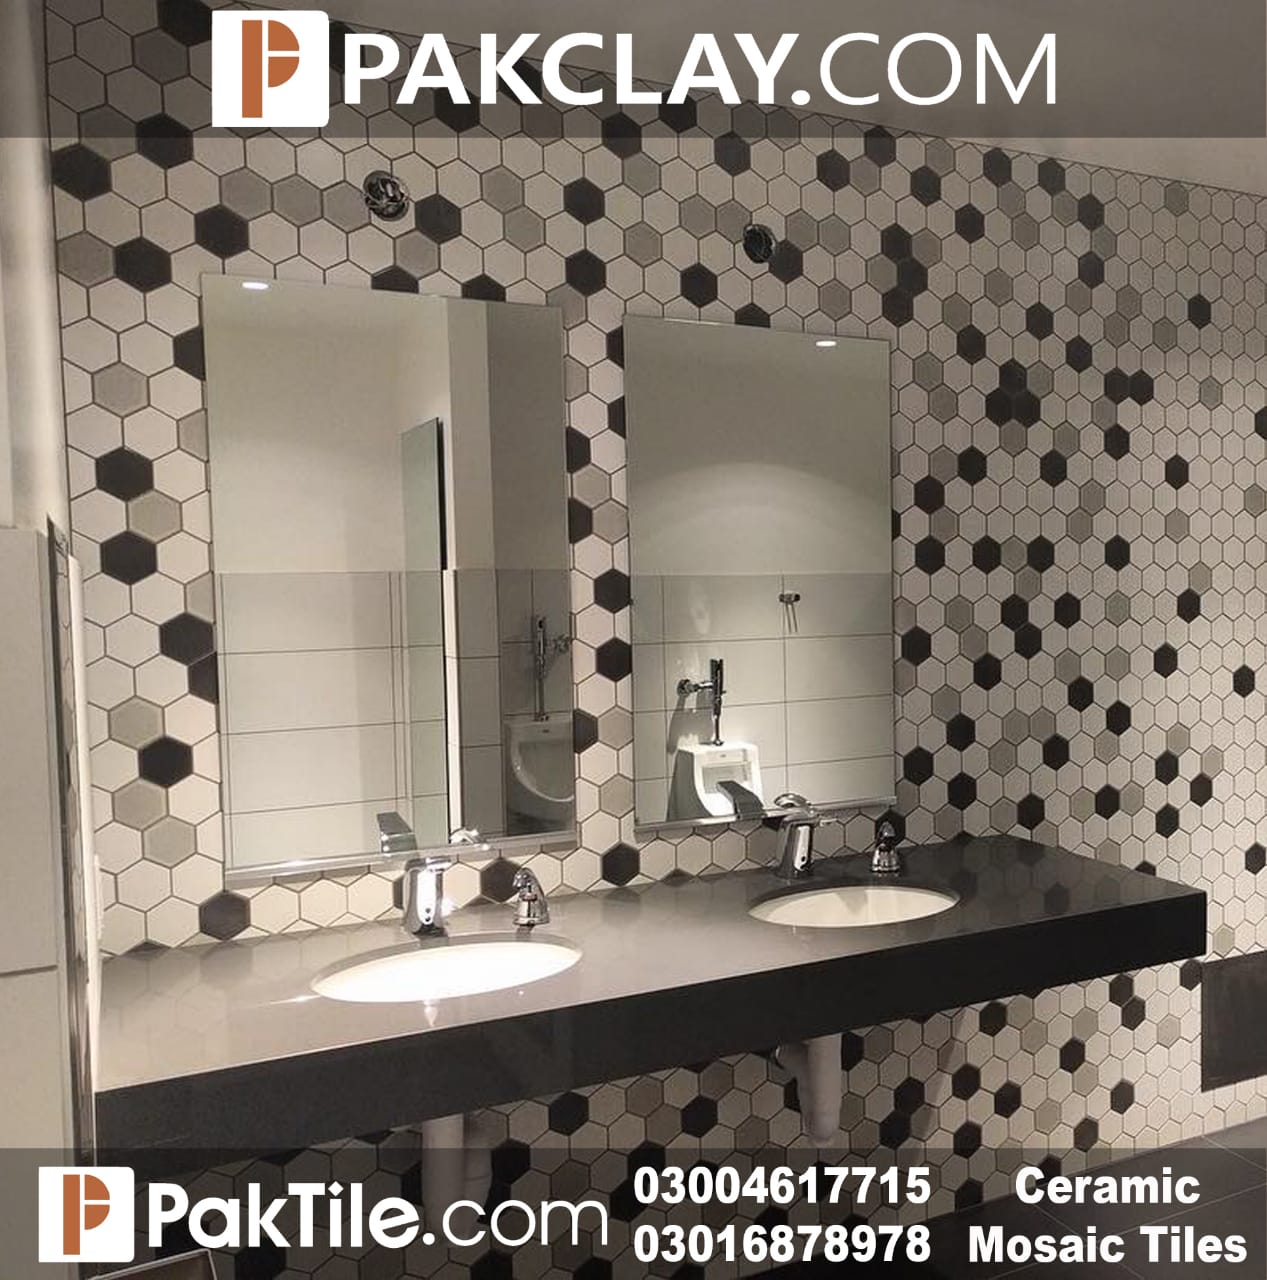 Pak Clay Hexagon Mosaic Tiles Designs